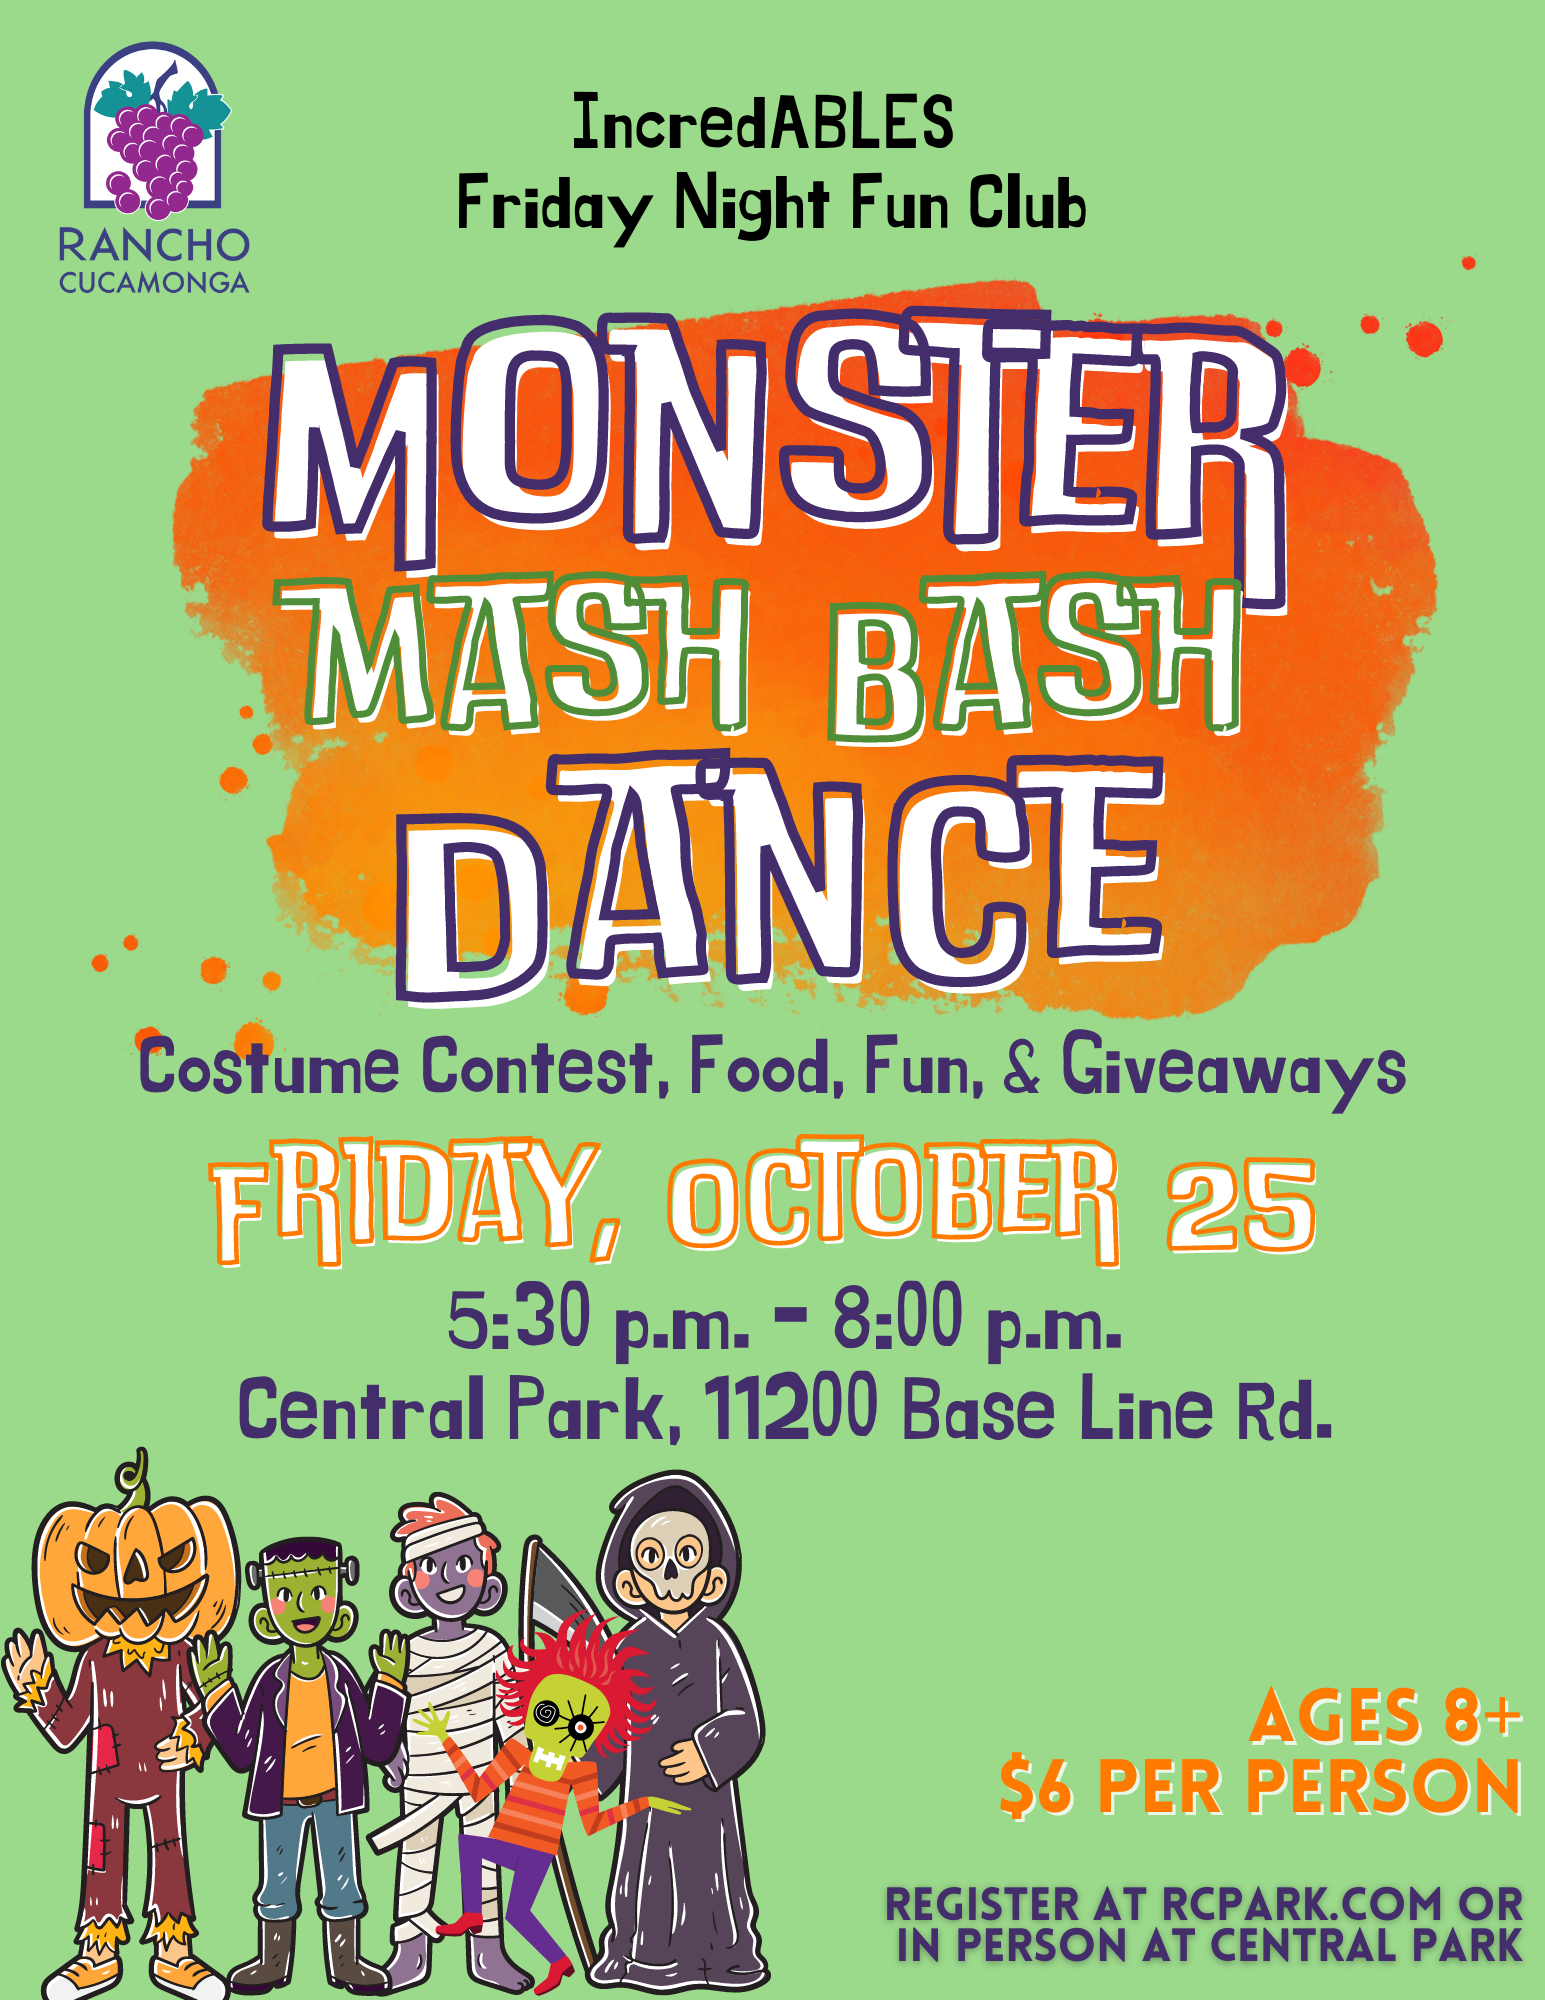 Monster mash Bash Dance